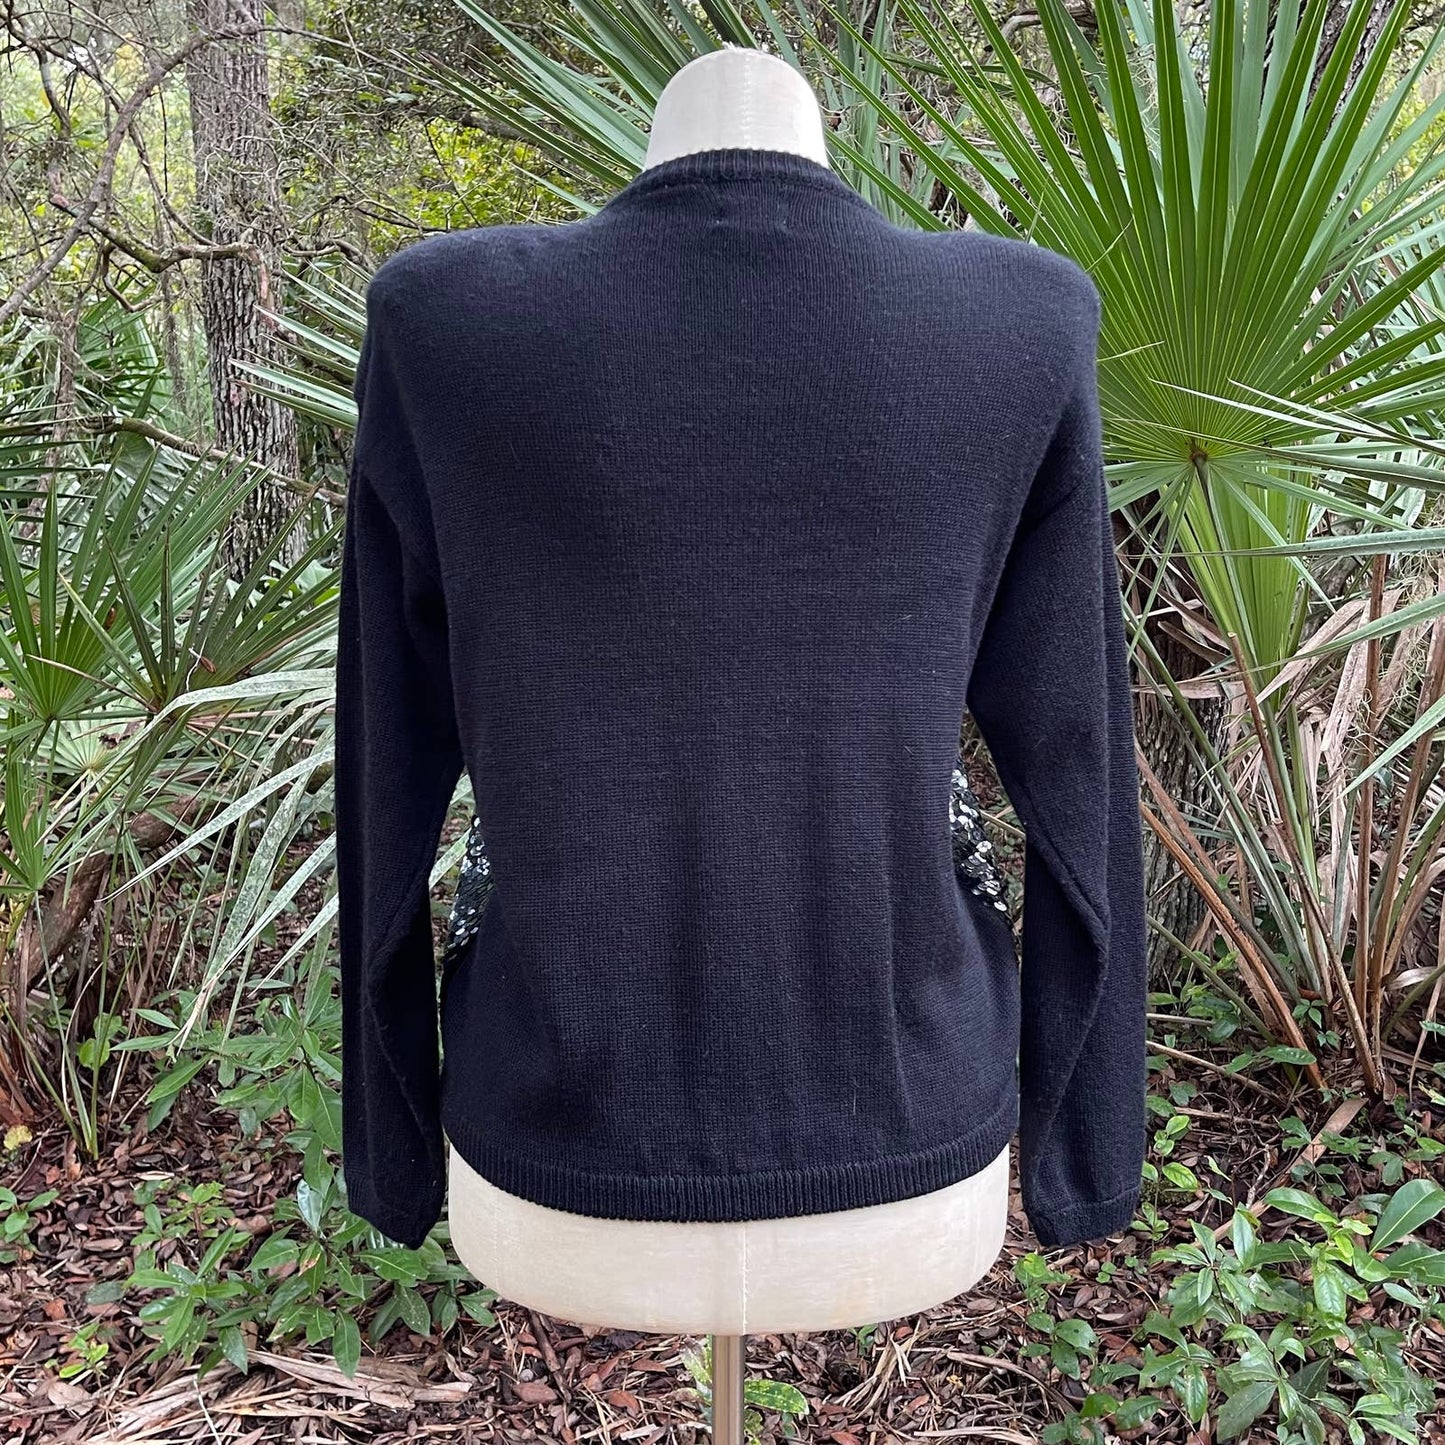 Vintage 80s Black Sequin Cardigan Sweater Buttons Wool Blend Tony Lambert Size M